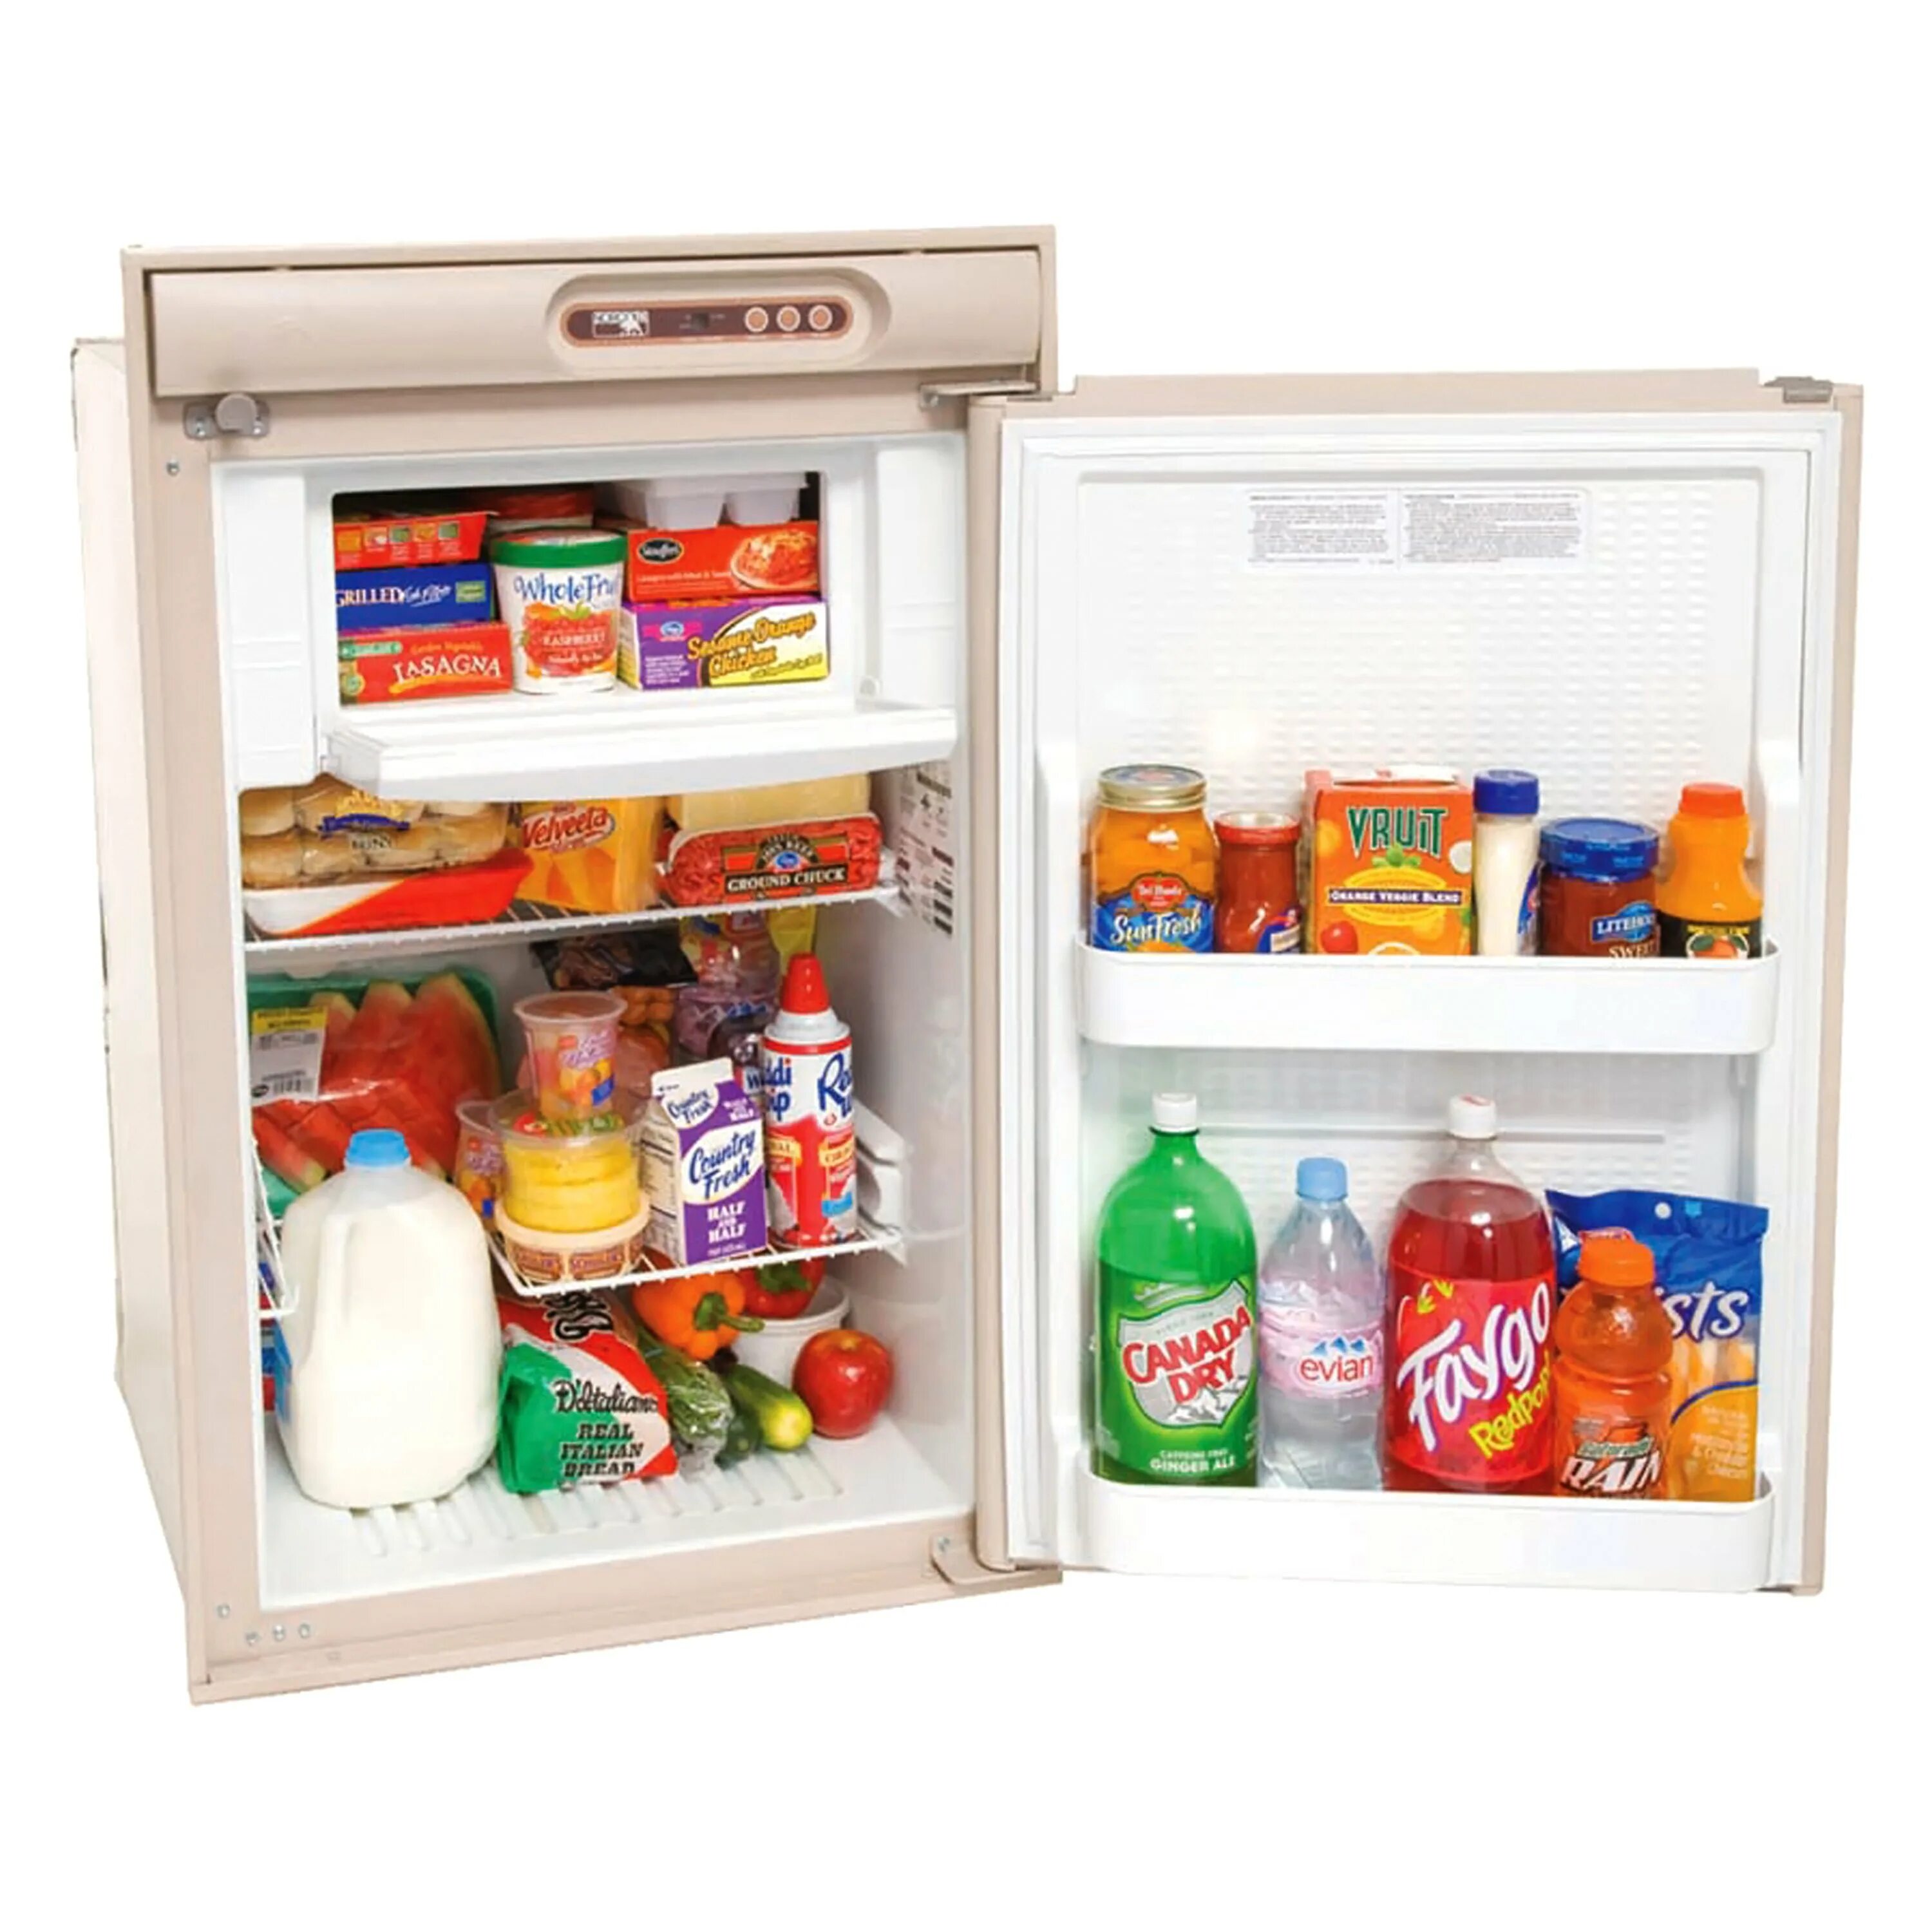 Холодильник 3 дюйма. Norcold холодильник. True Refrigerator t-23 холодильник. Norcold холодильник автомобильный. Smart 300 холодильник.